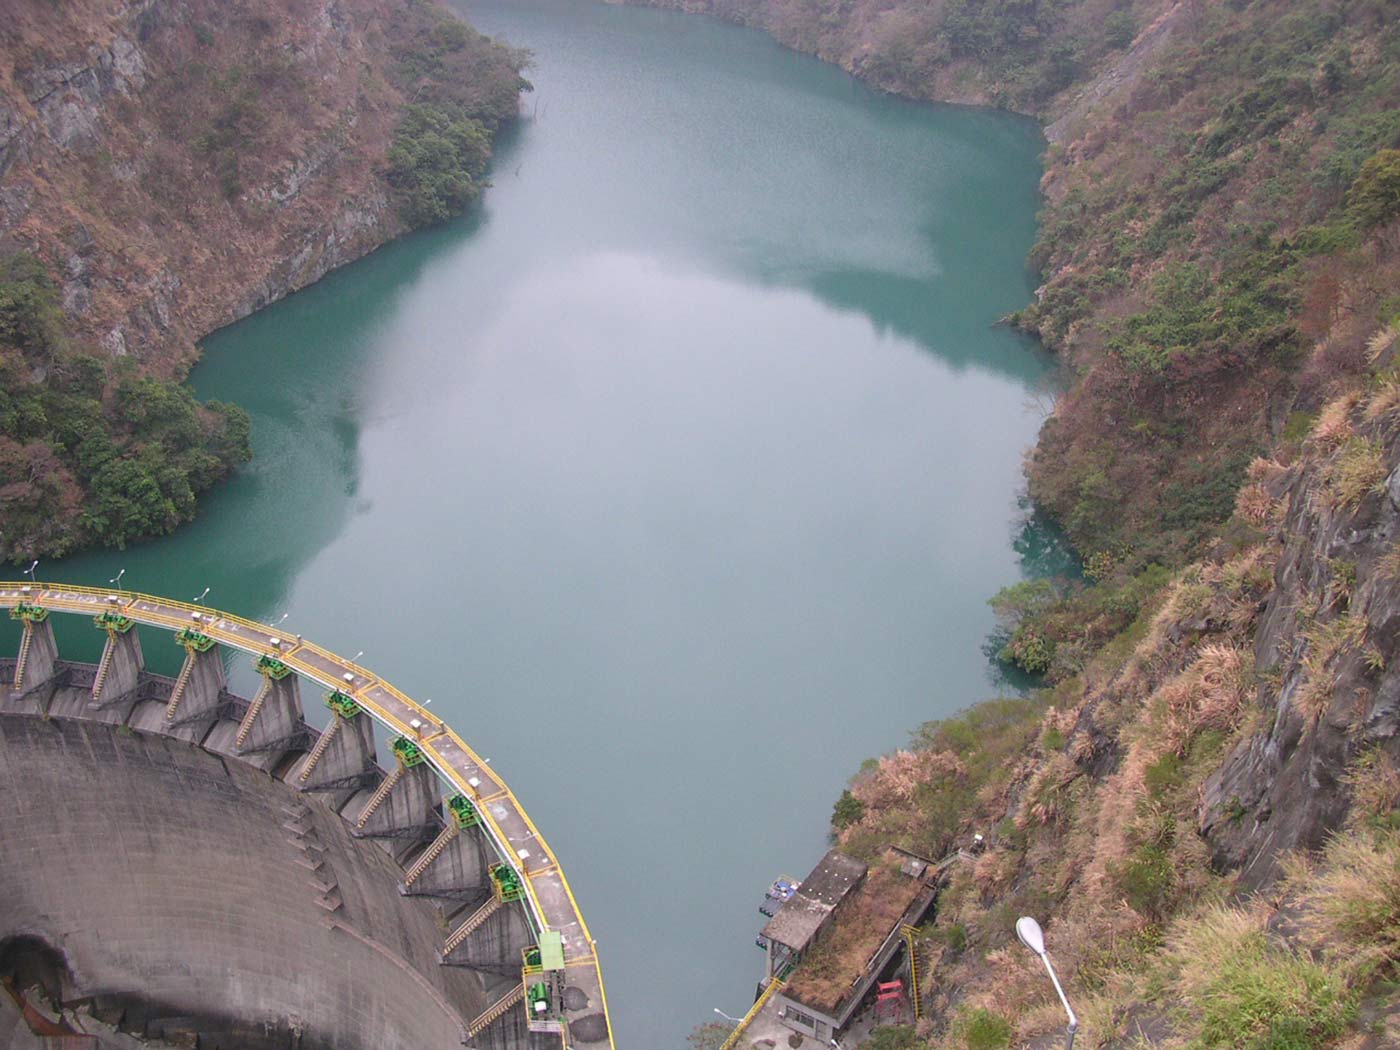 The "Jung Hua" dam and reservoir.